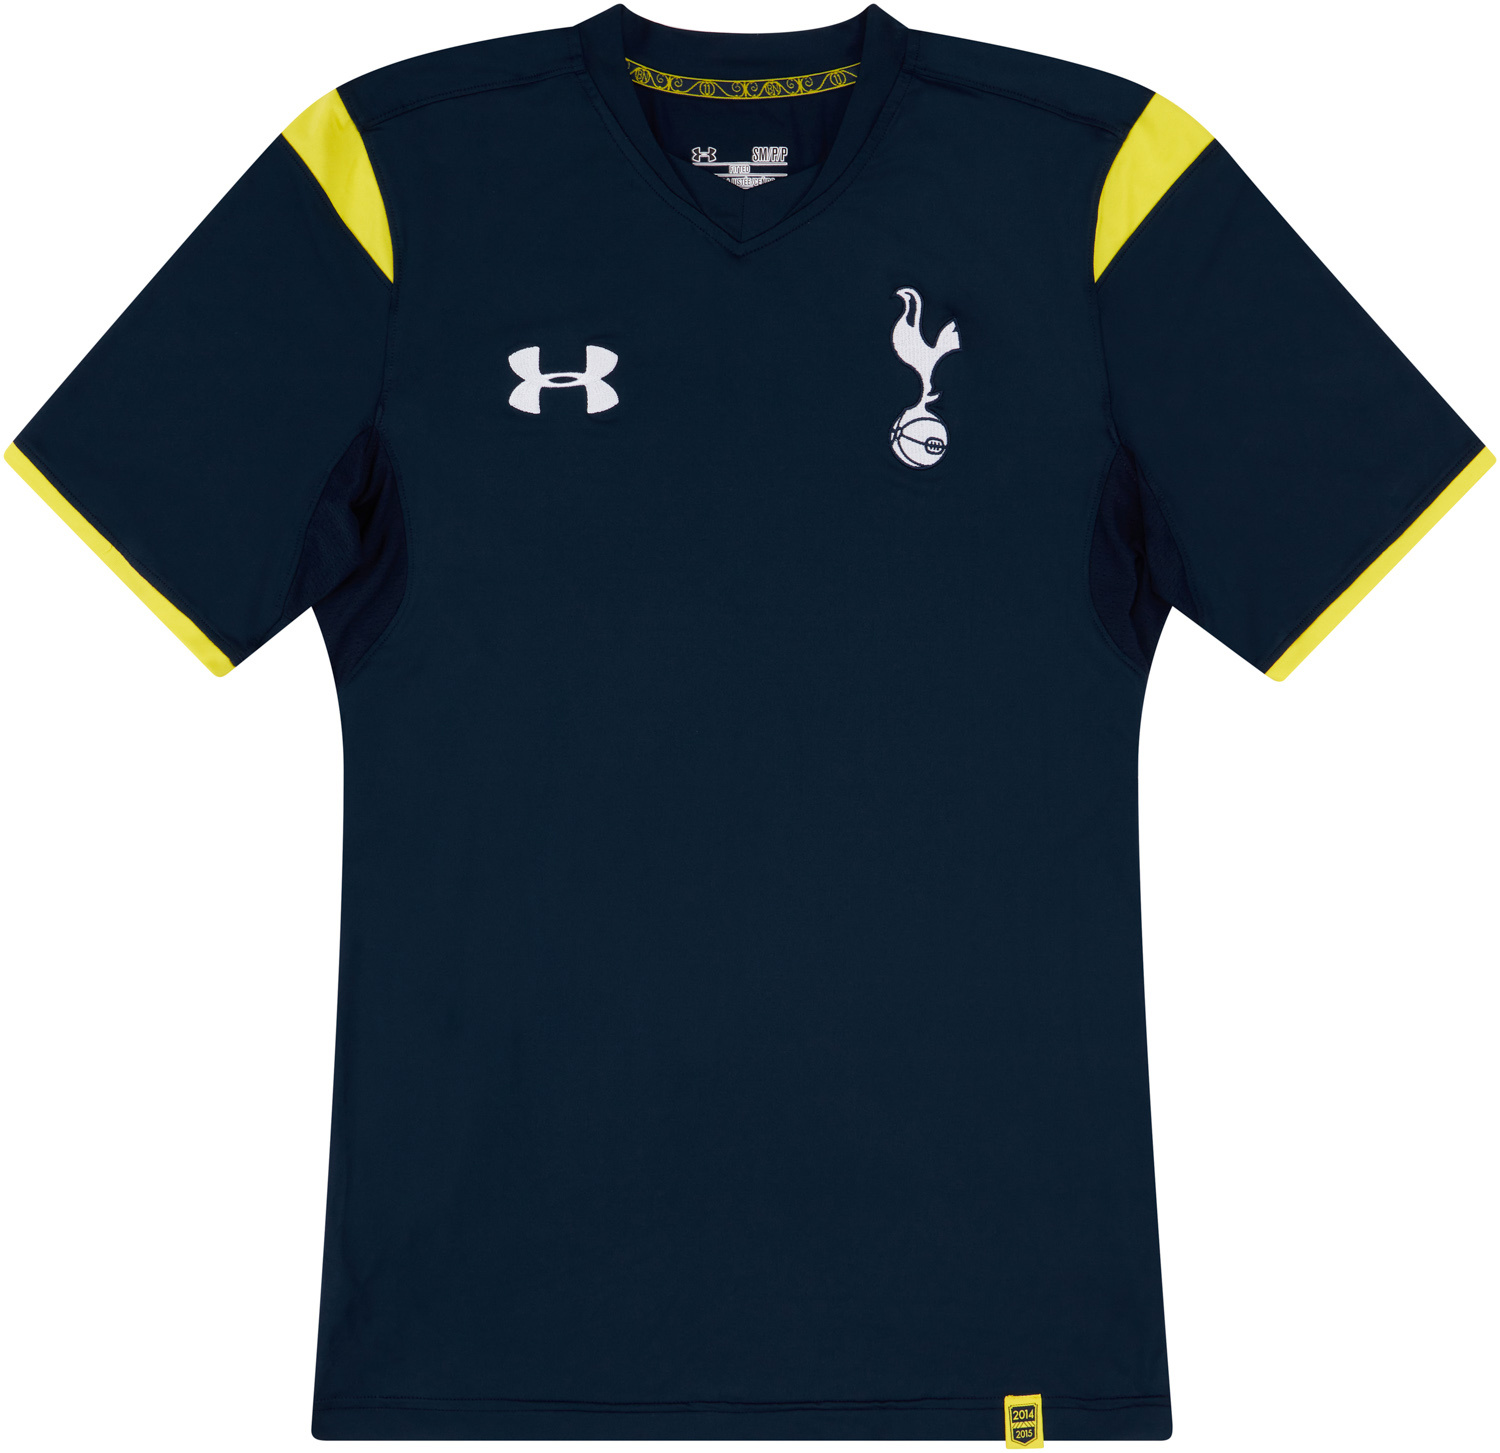 Tottenham Under Training Shirt (Excellent) S